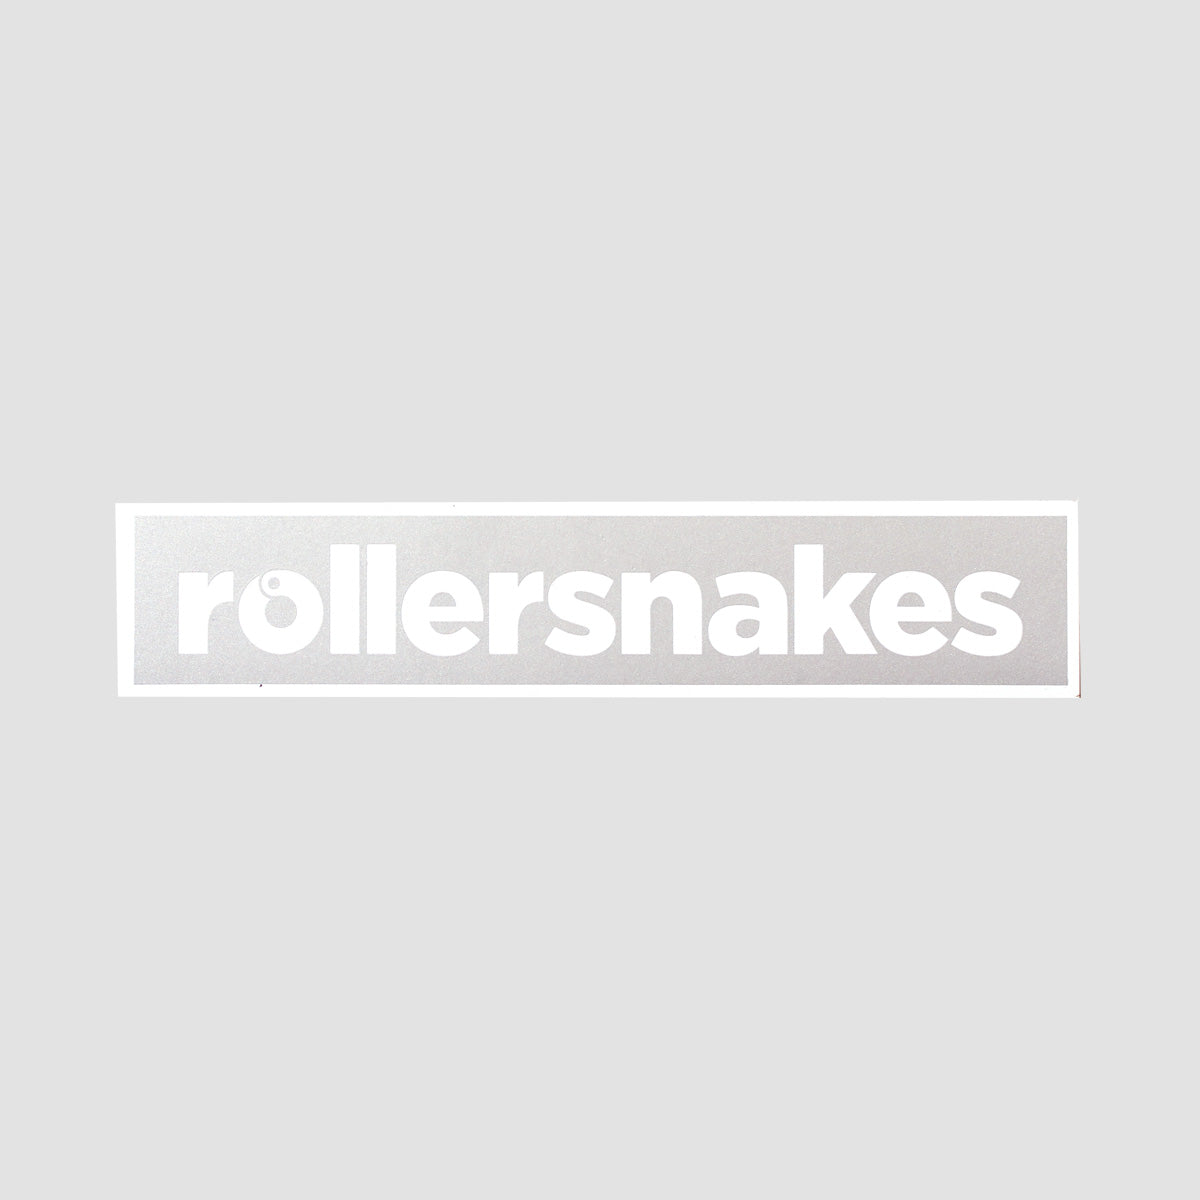 Rollersnakes WordMark Sticker Silver 200x41mm